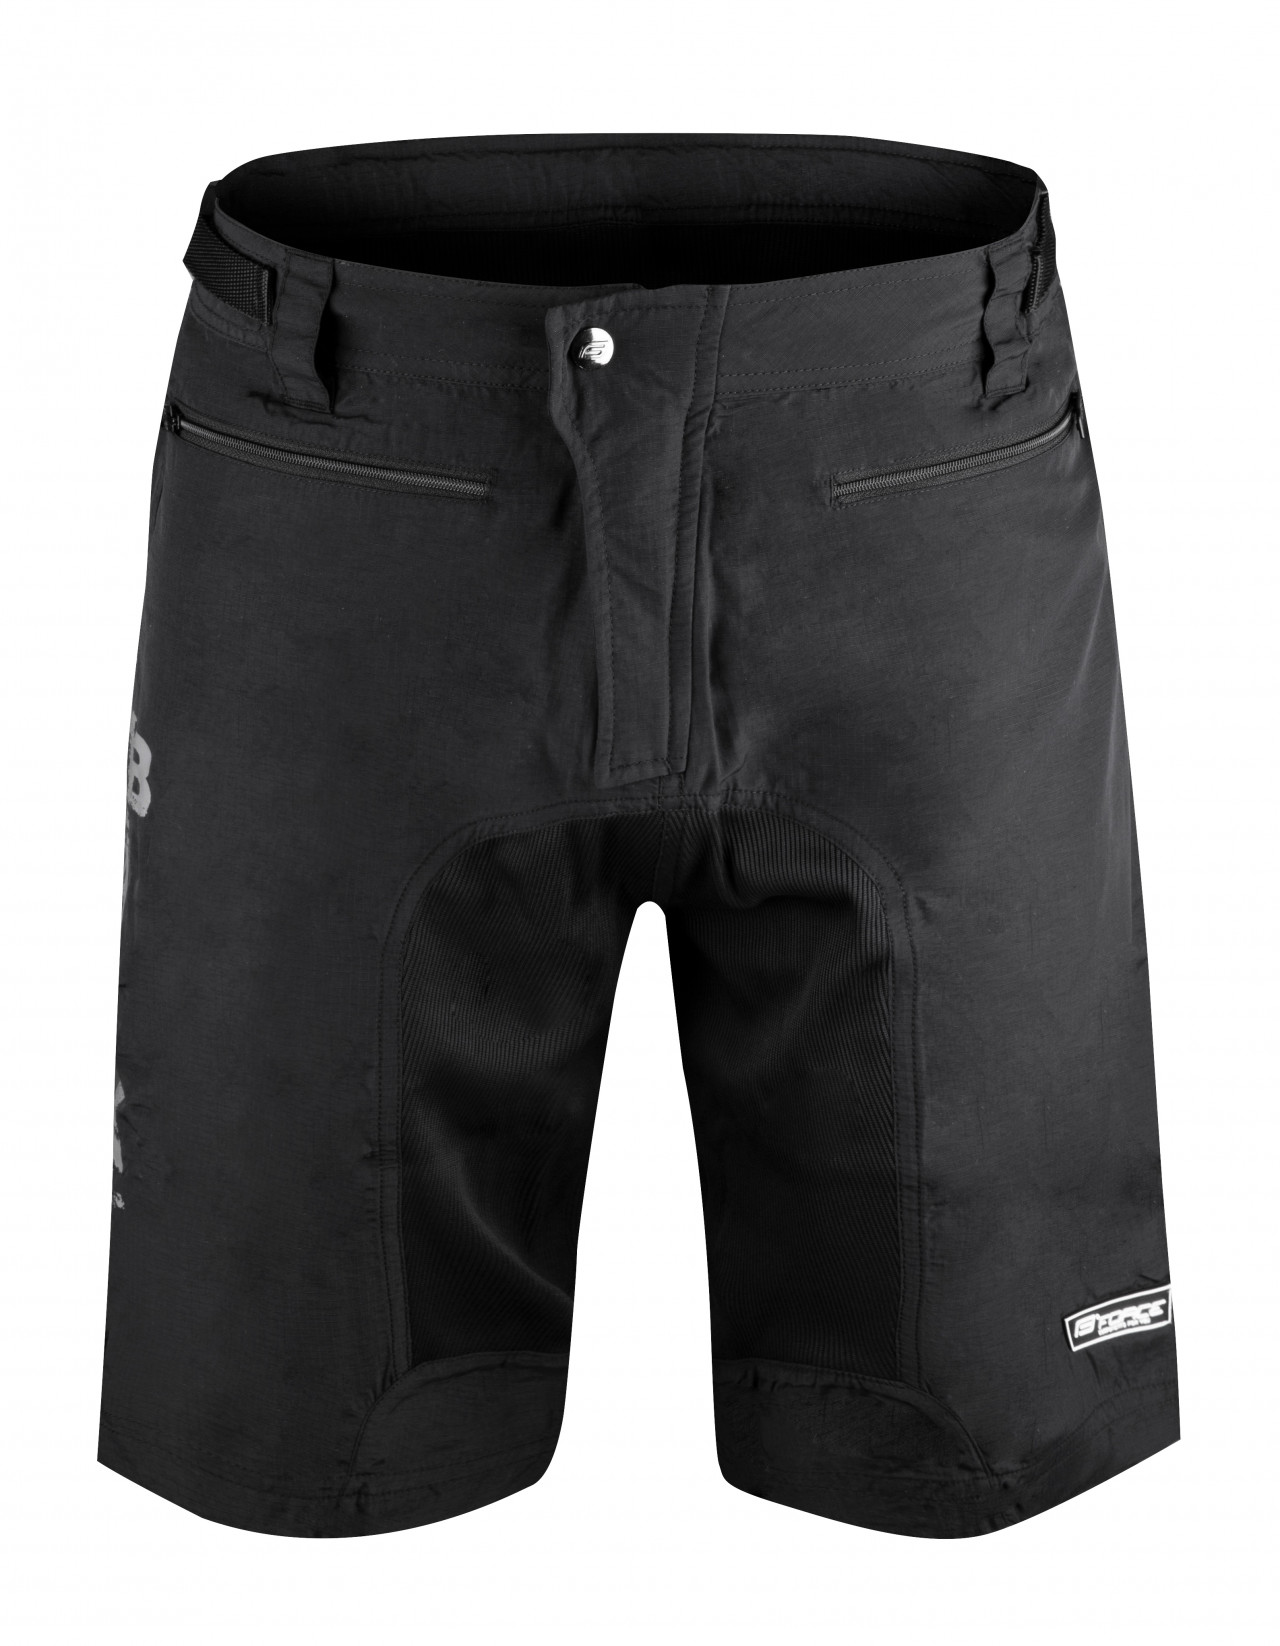 Shorts FORCE MTB-11 with sep. pad, black XXXL